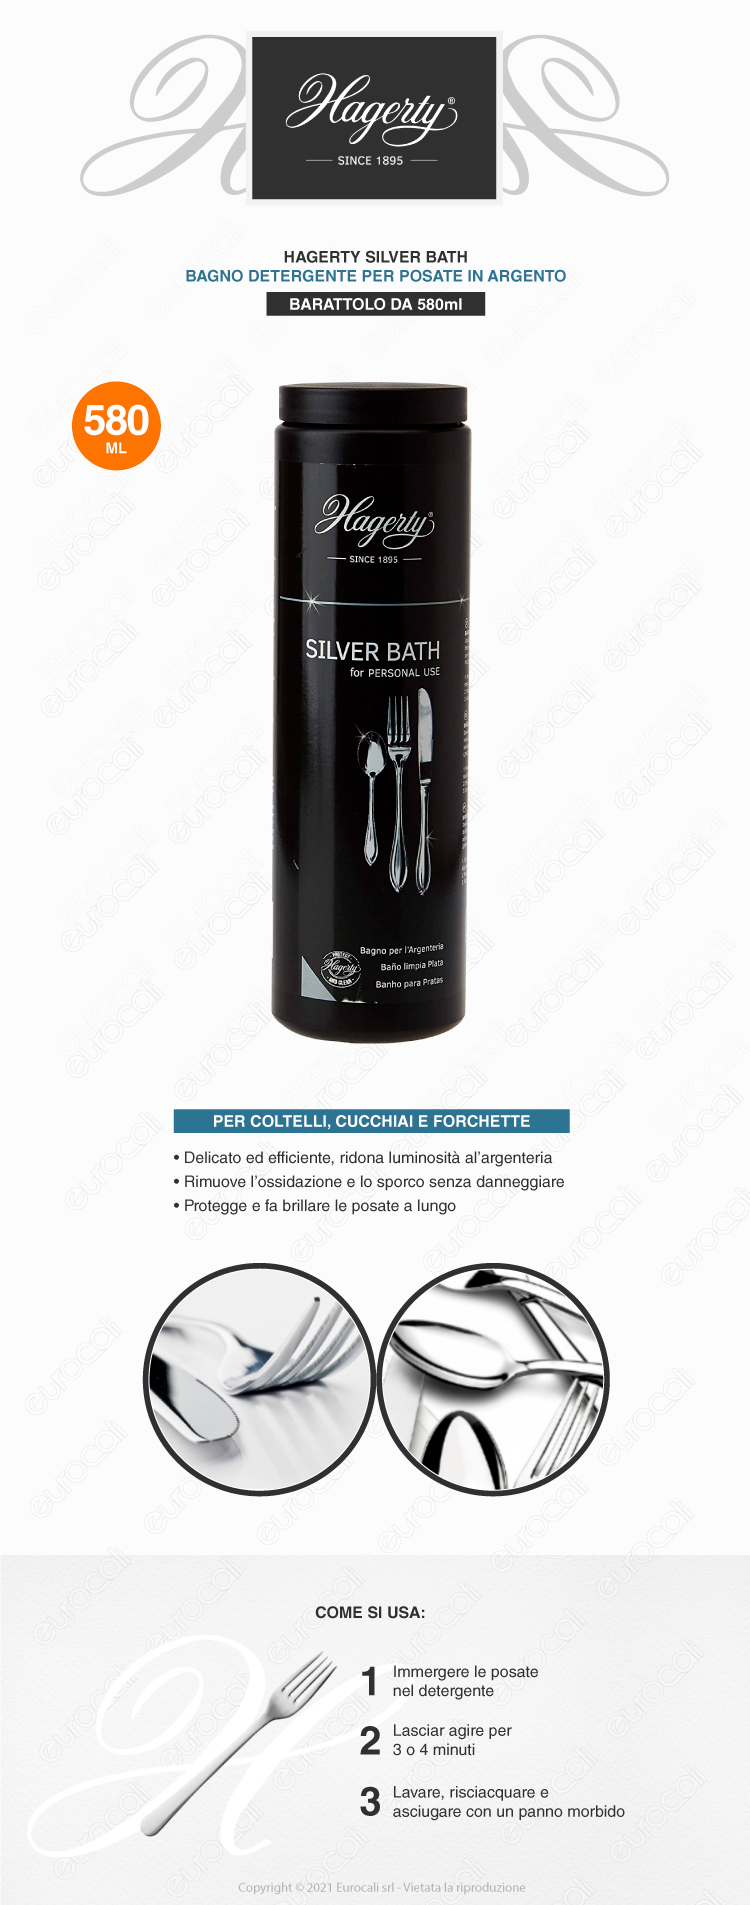 hagerty silver bath pulitore posate argento bagno detergente immersione 185ml